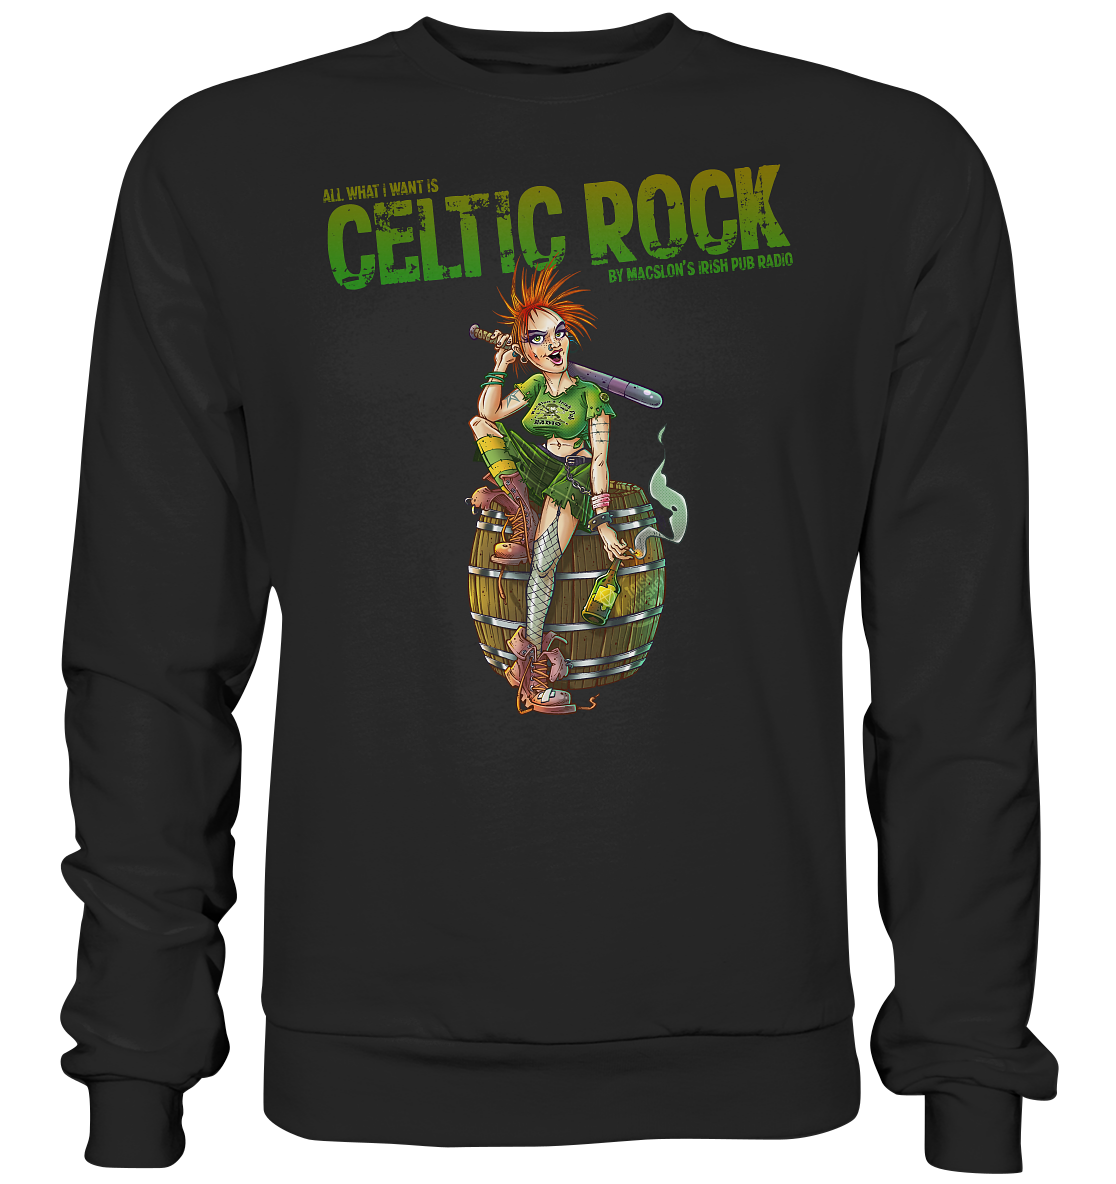 All What I Want Is "Celtic Rock" - Premium Sweatshirt